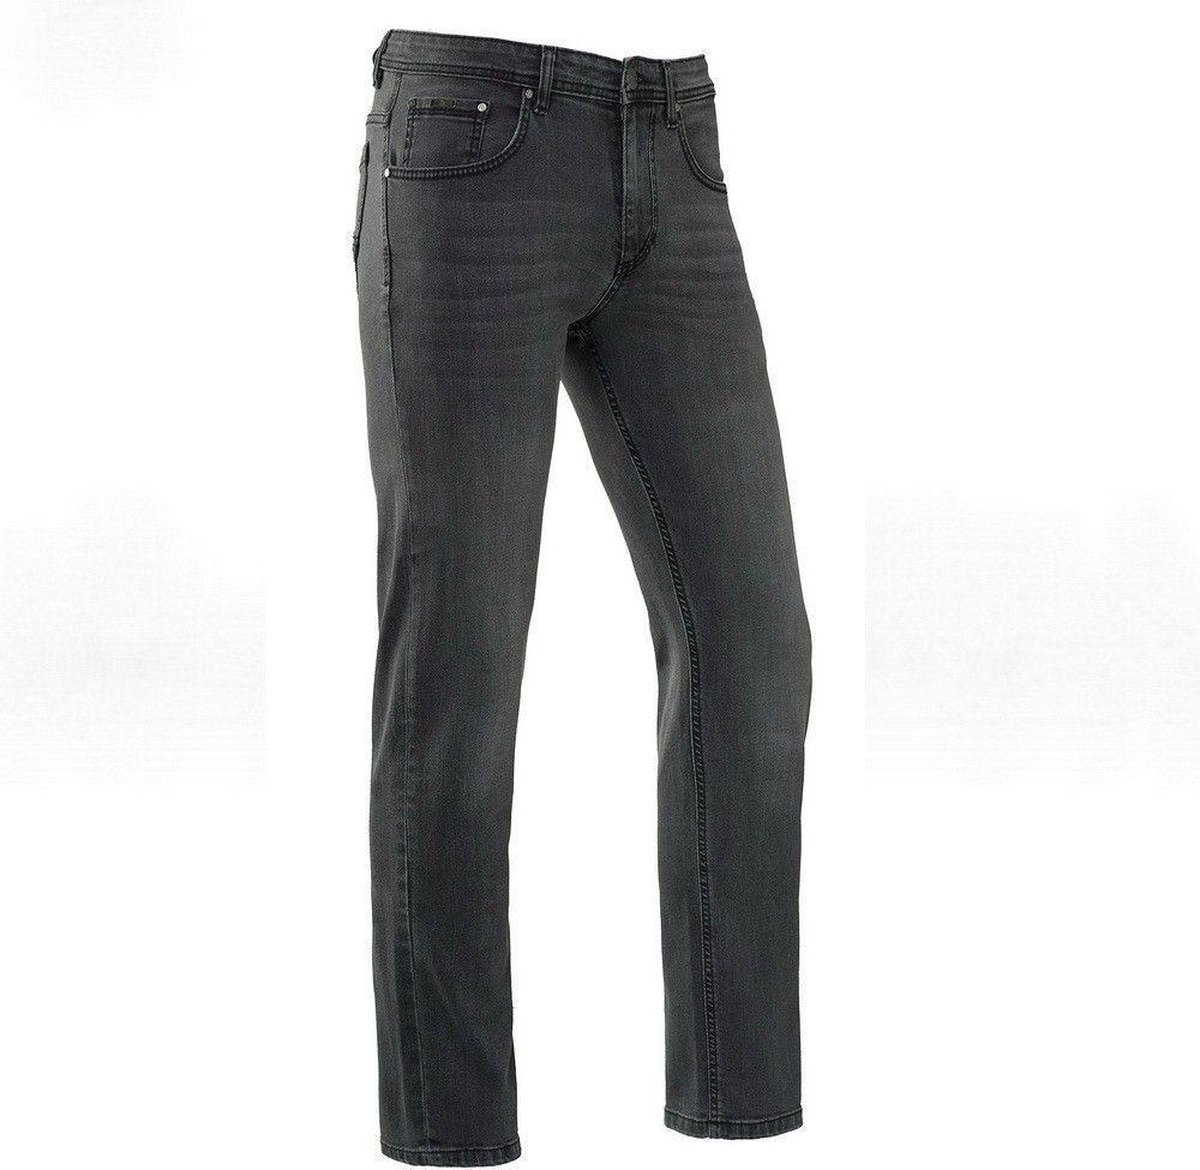 Brams Paris - Heren Jeans - Stretch - Lengte 36 - Jason - Dark Grey